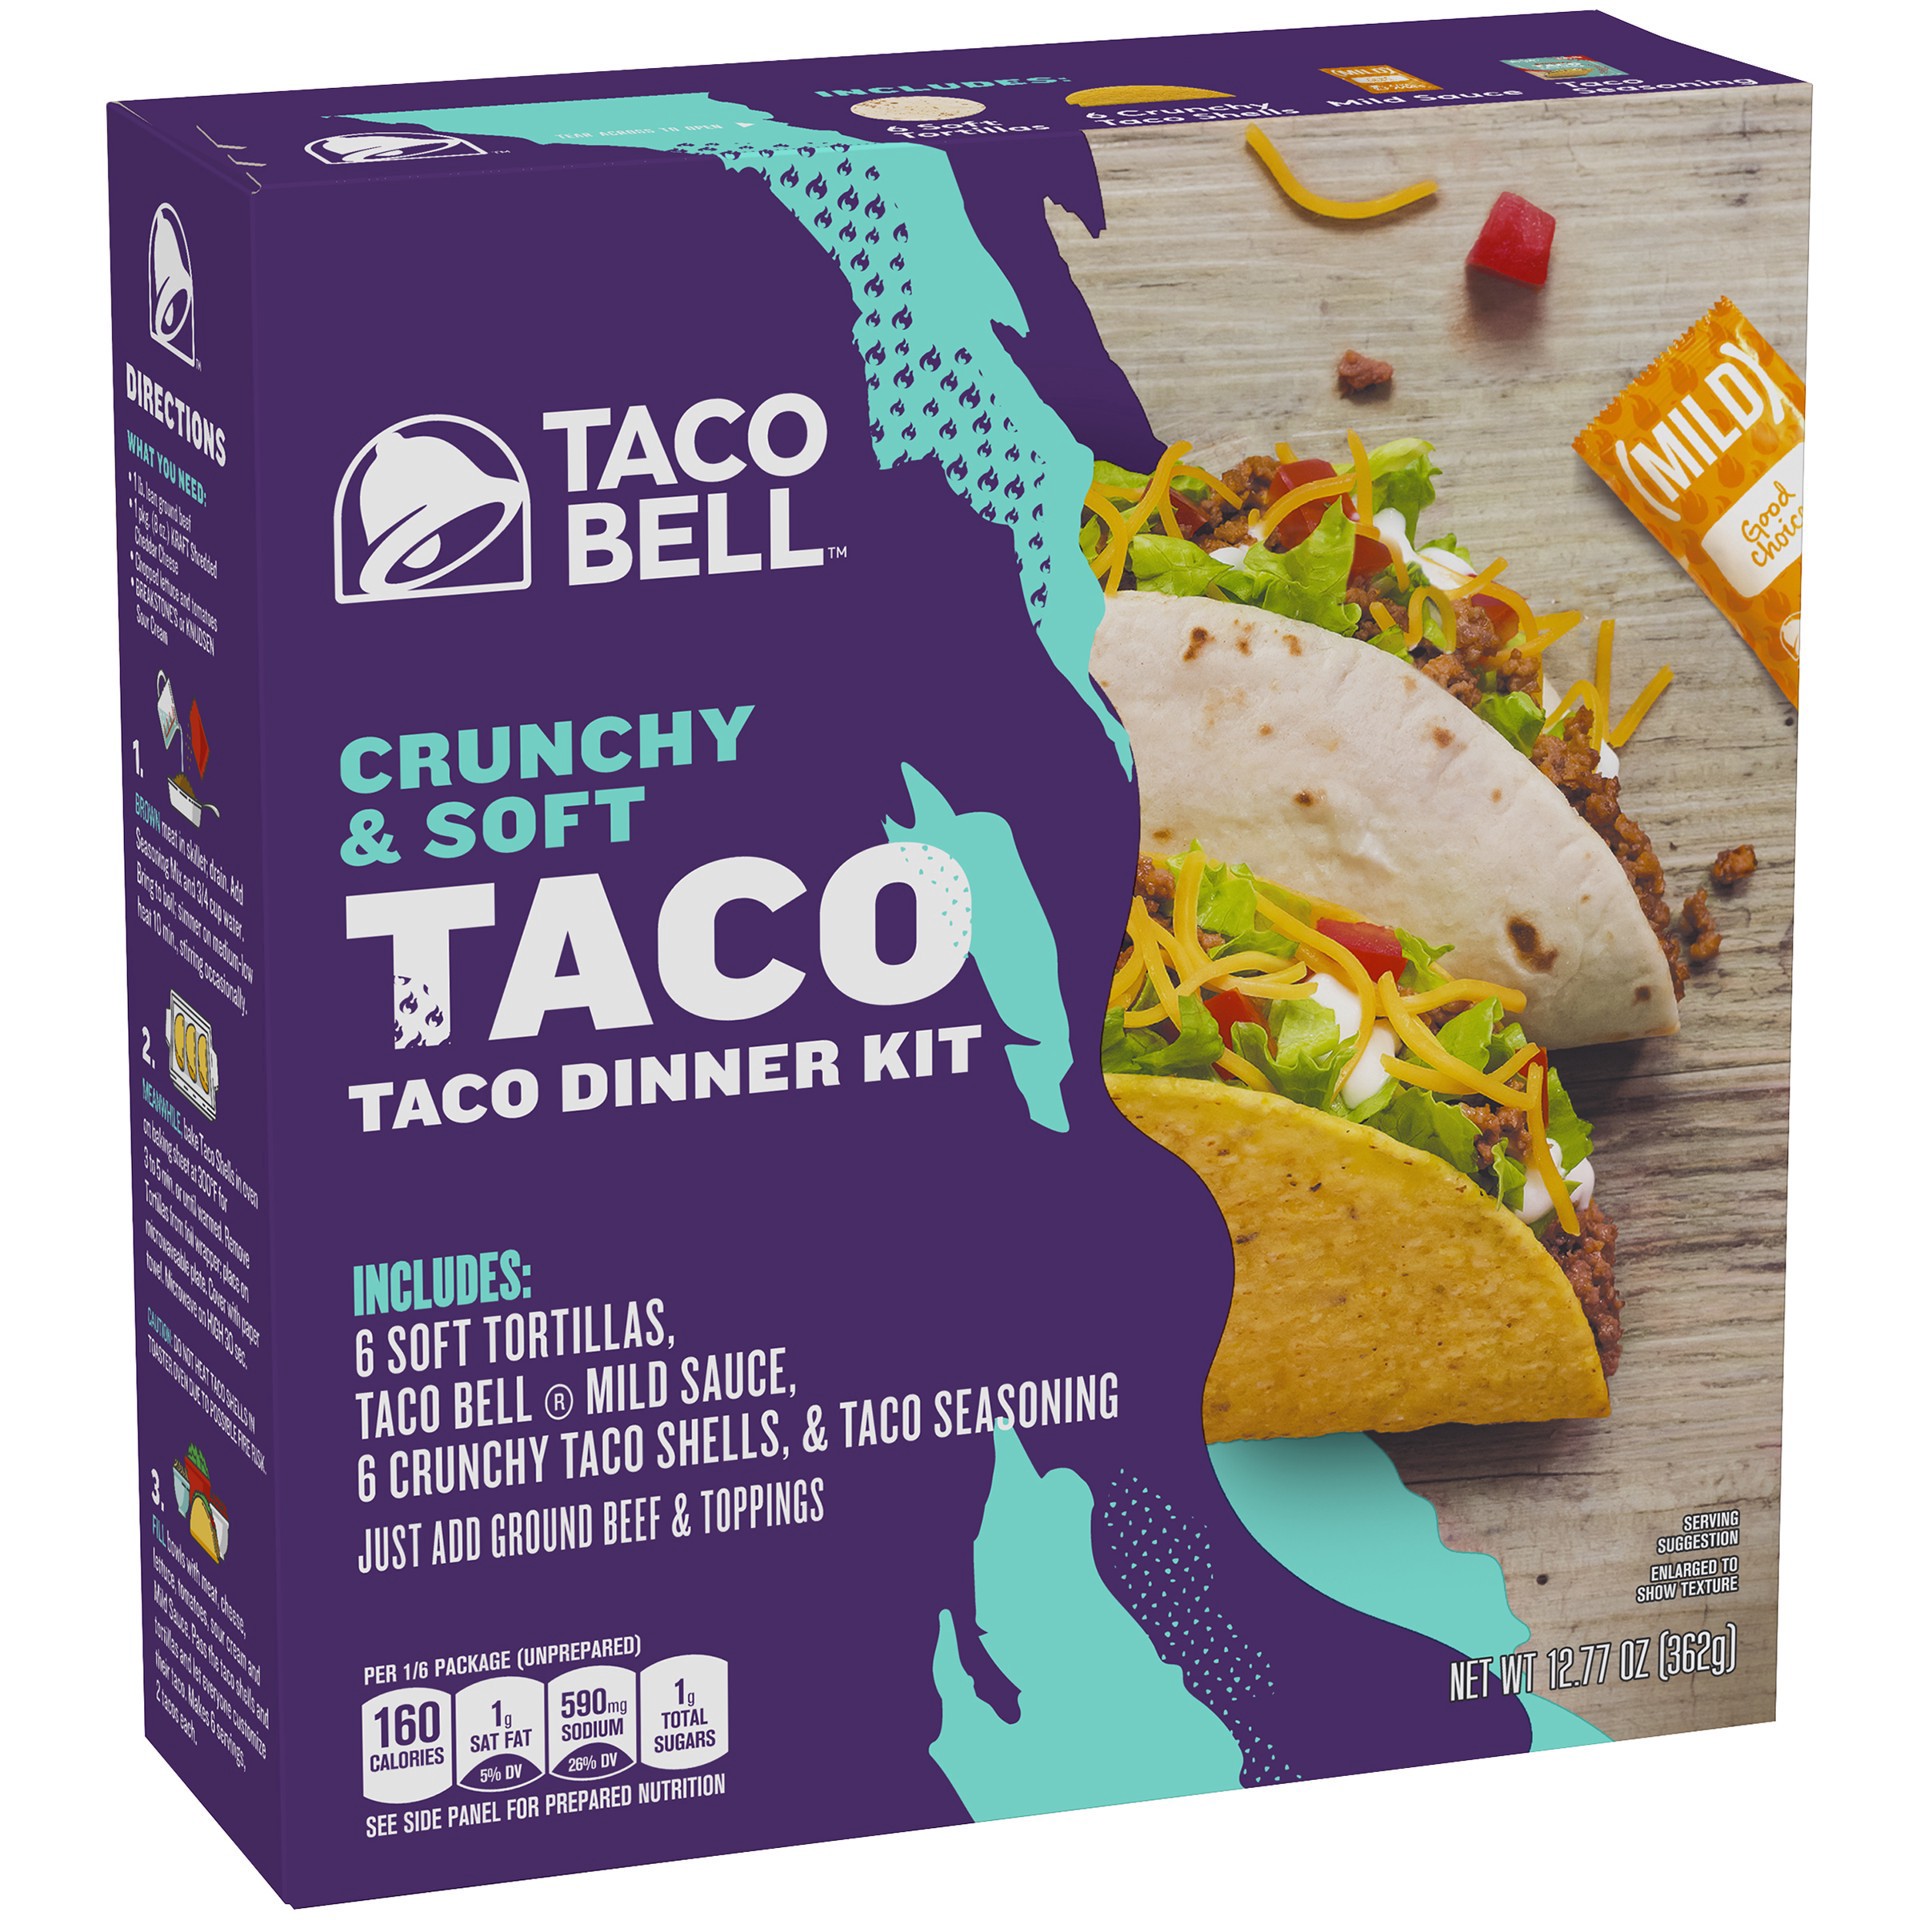 slide 39 of 101, Taco Bell Crunchy & Soft Taco Cravings Kit with 6 Soft Tortillas, 6 Crunchy Taco Shells, Taco Bell Mild Sauce & Seasoning, 12.77 oz Box, 1 ea